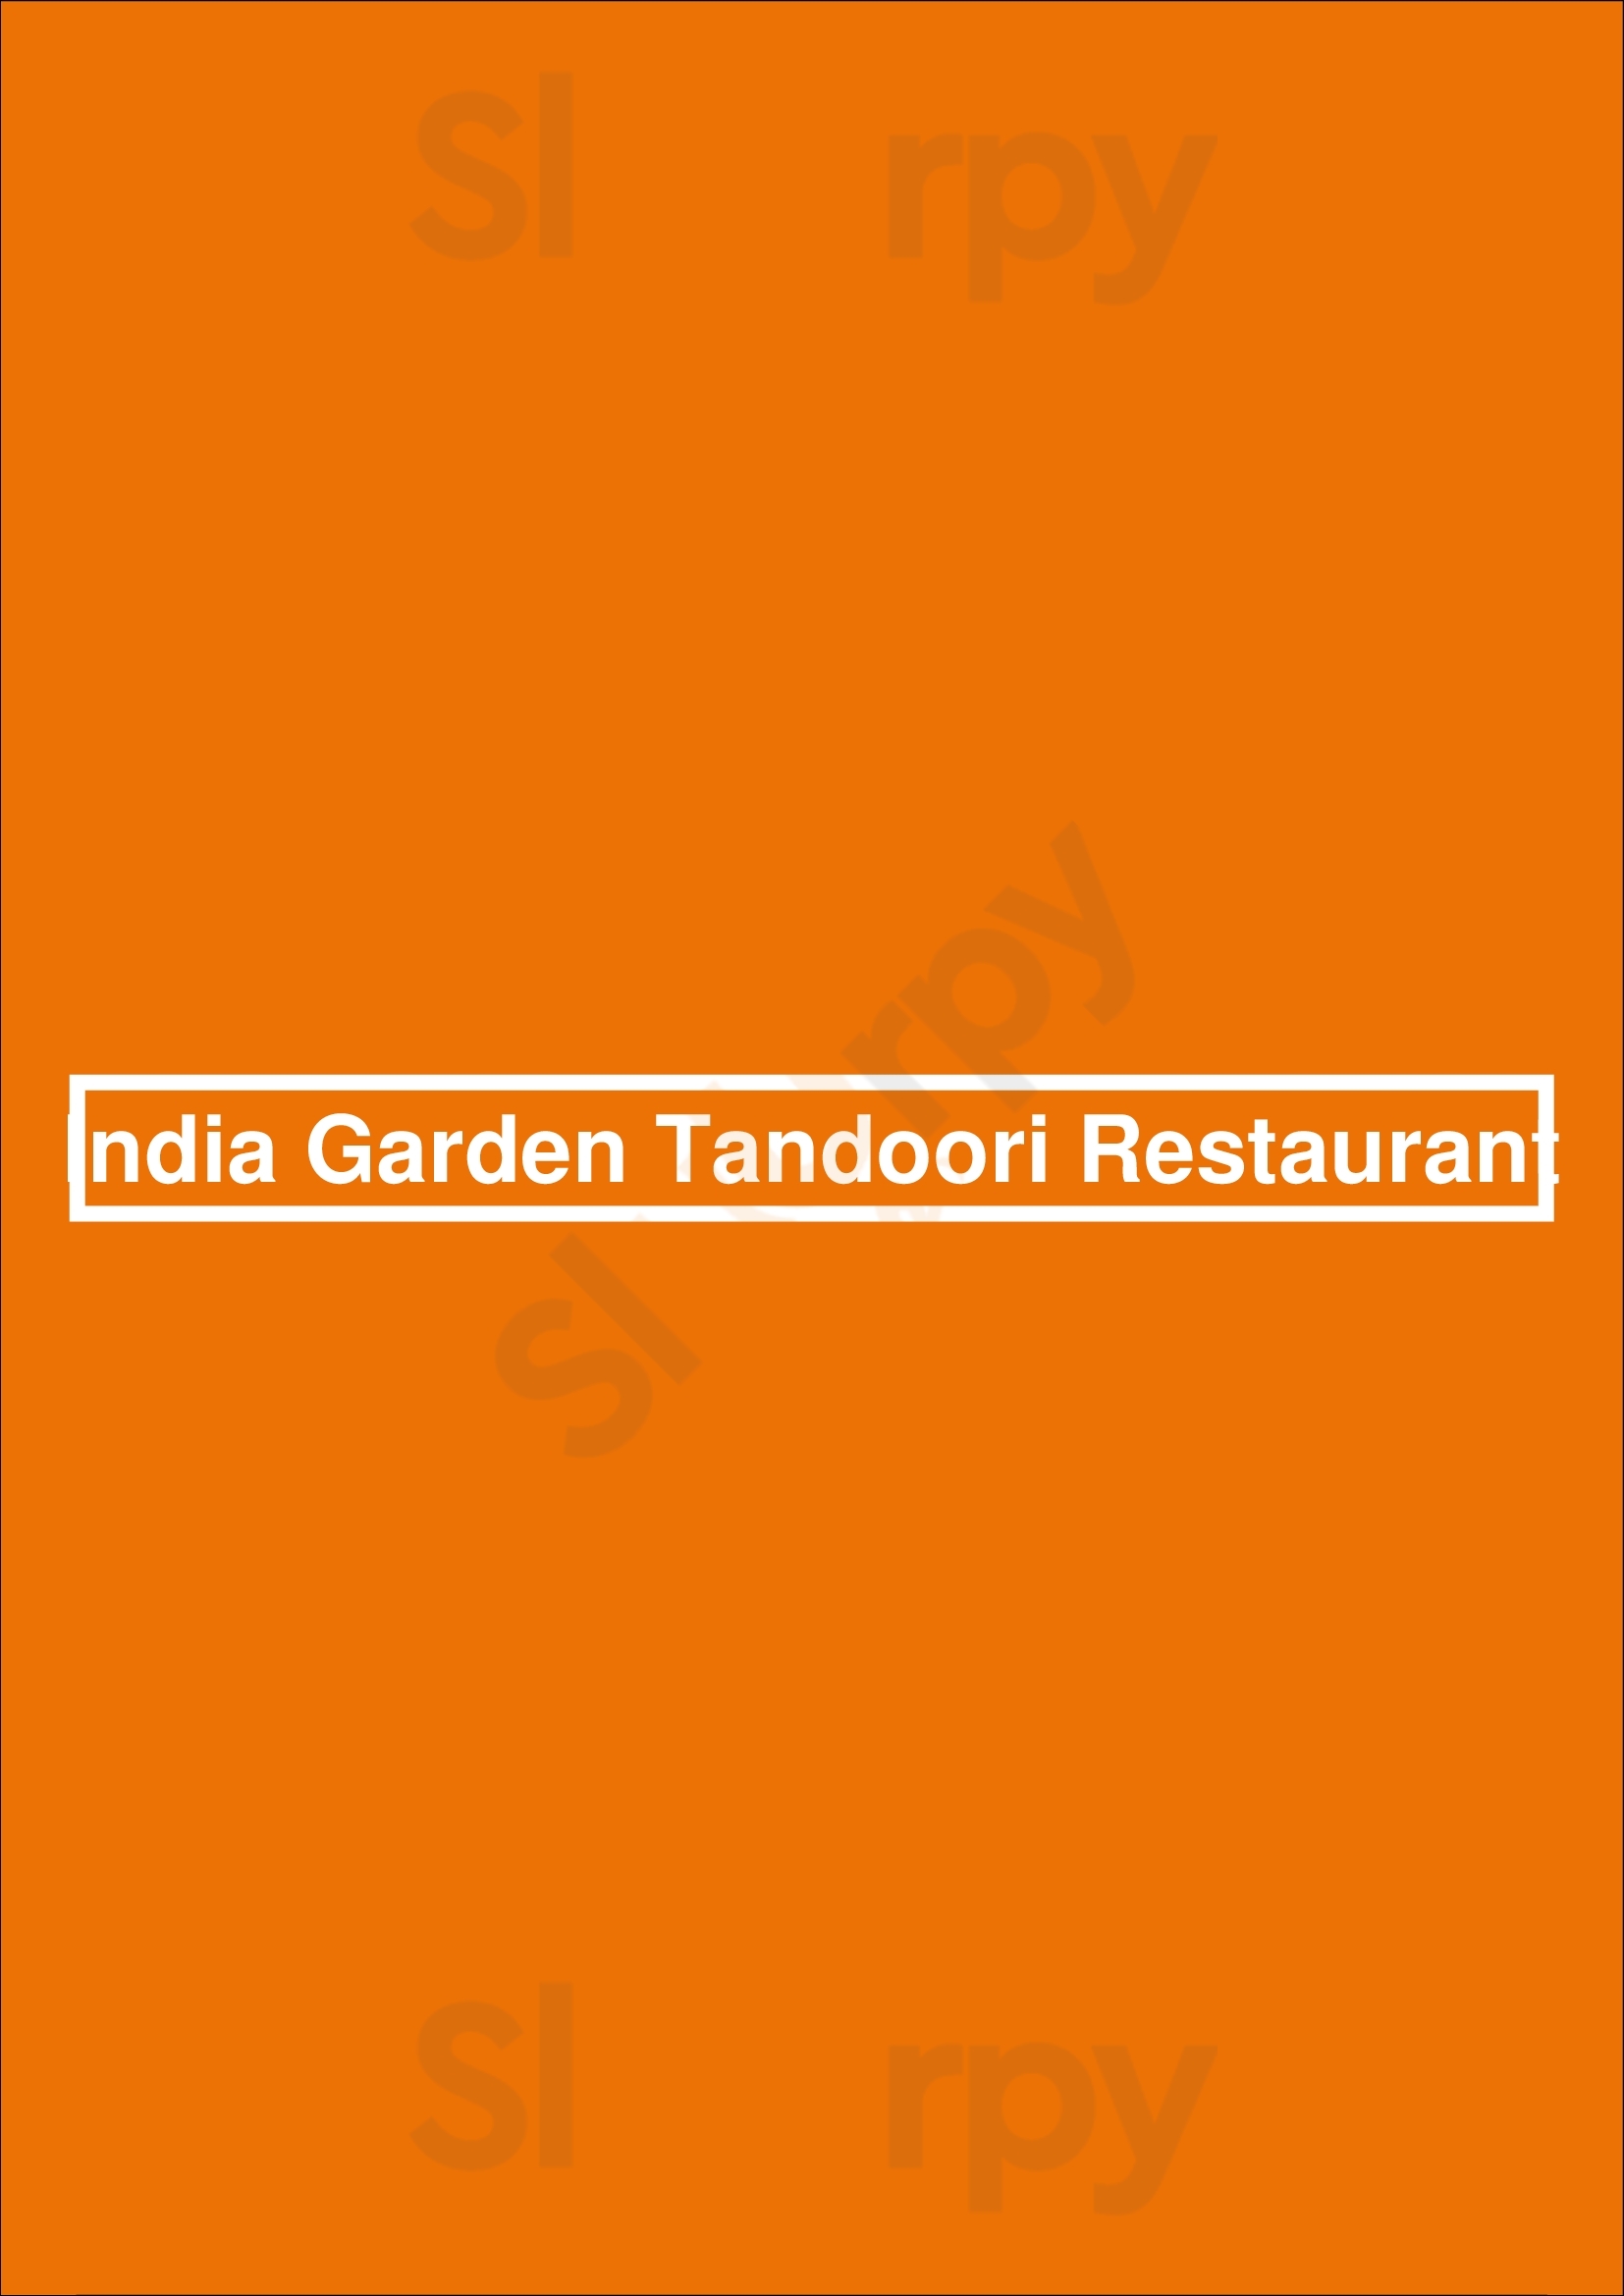 India Garden Tandoori Restaurant Delft Menu - 1